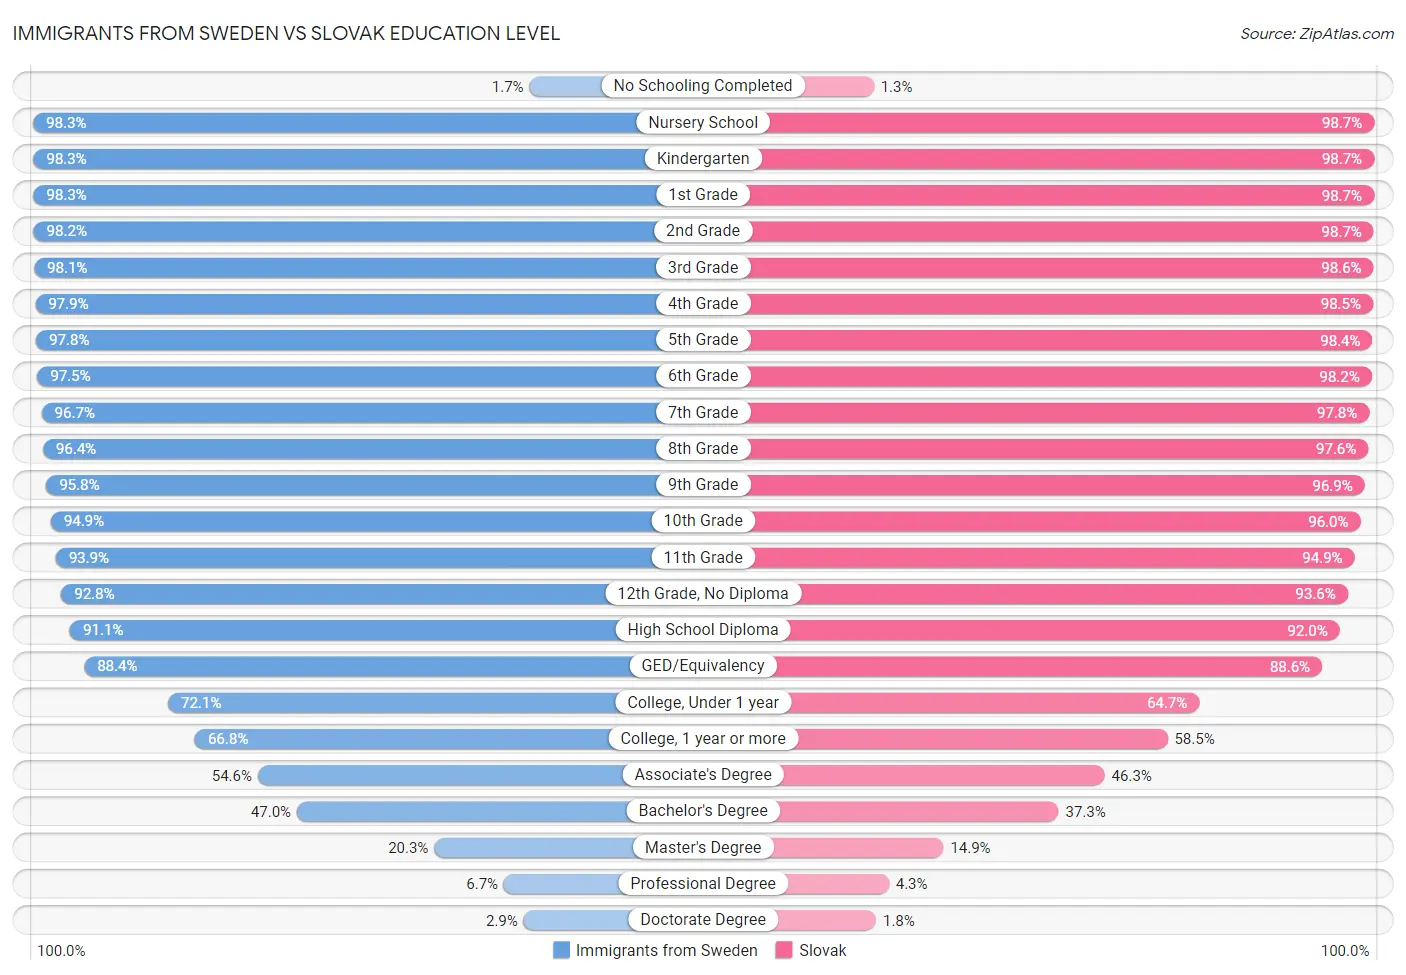 Immigrants from Sweden vs Slovak Education Level